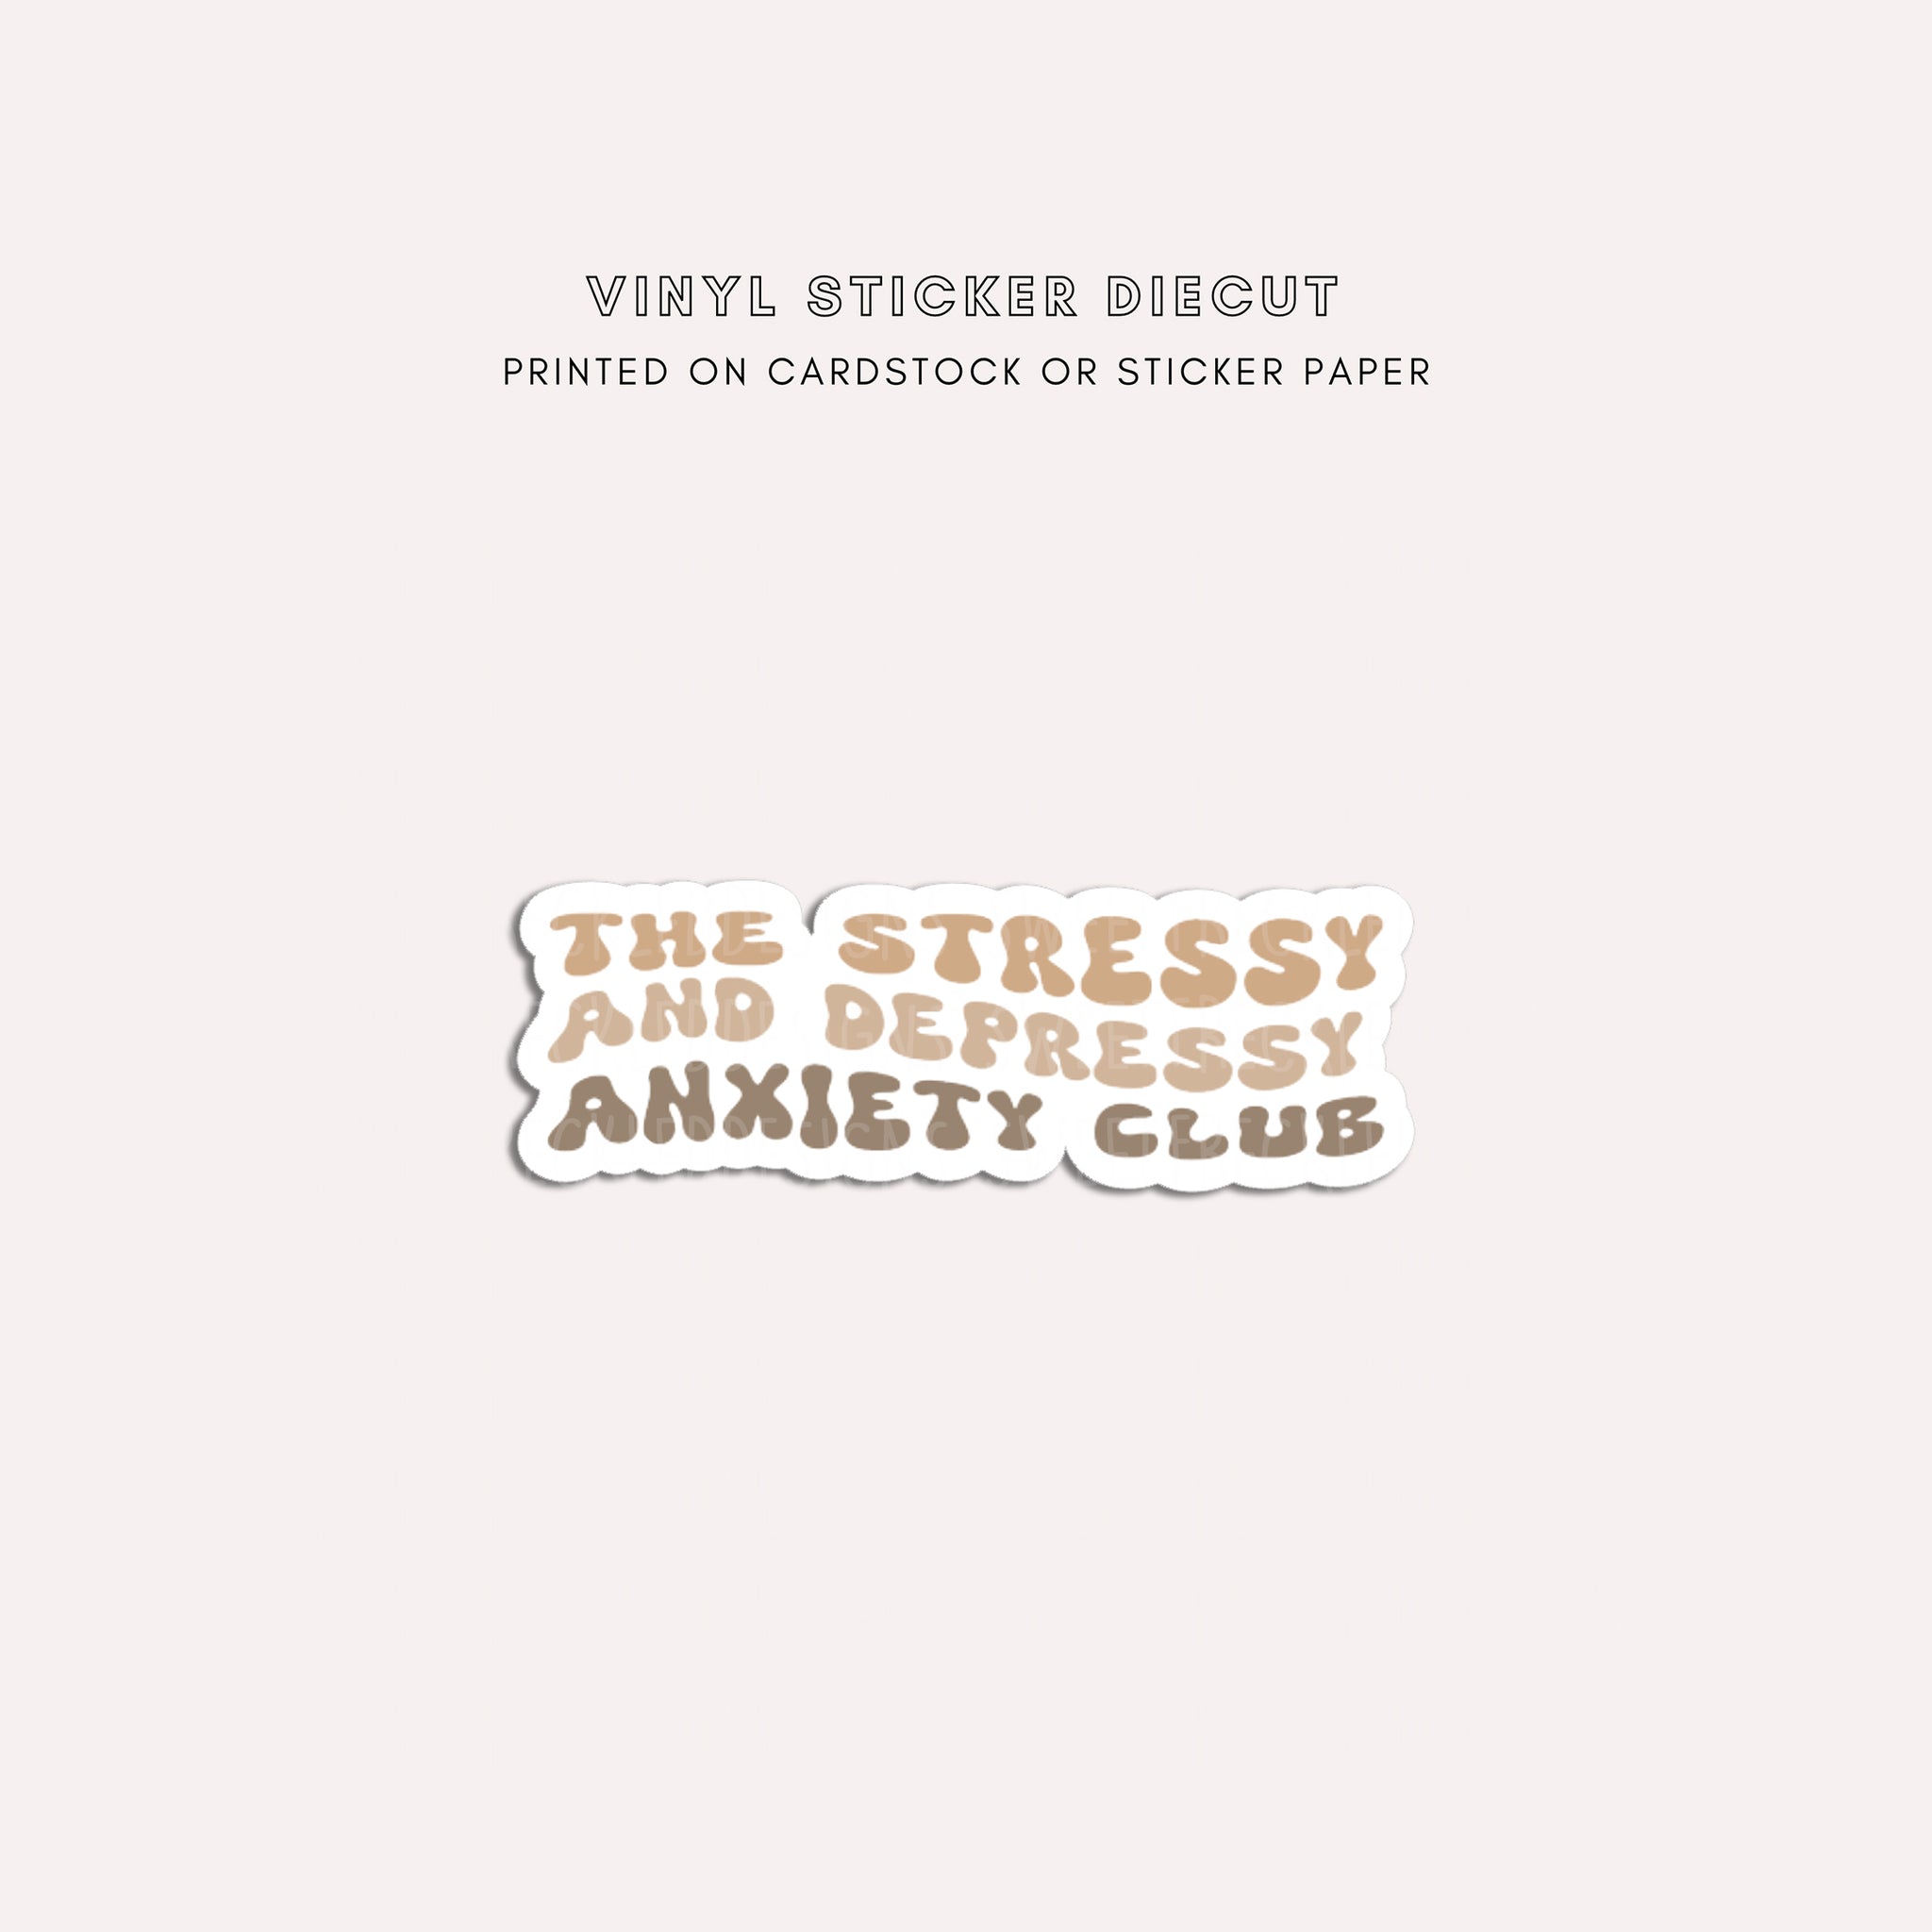 Vinyl Sticker Diecut - The Stressy and Depressy Anxiety Club